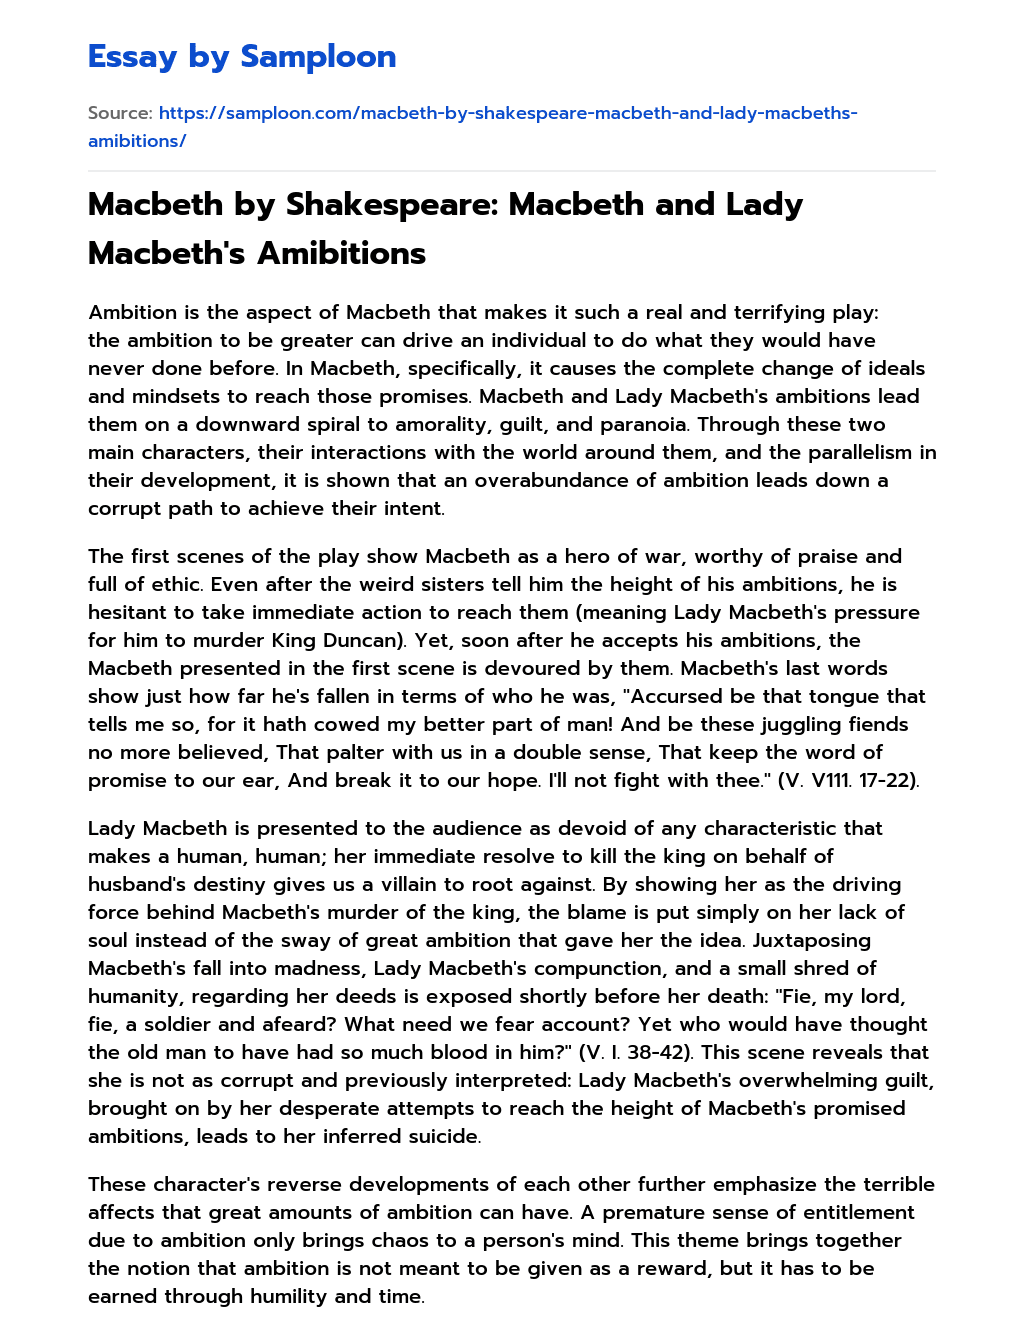 Macbeth by Shakespeare: Macbeth and Lady Macbeth’s Amibitions essay